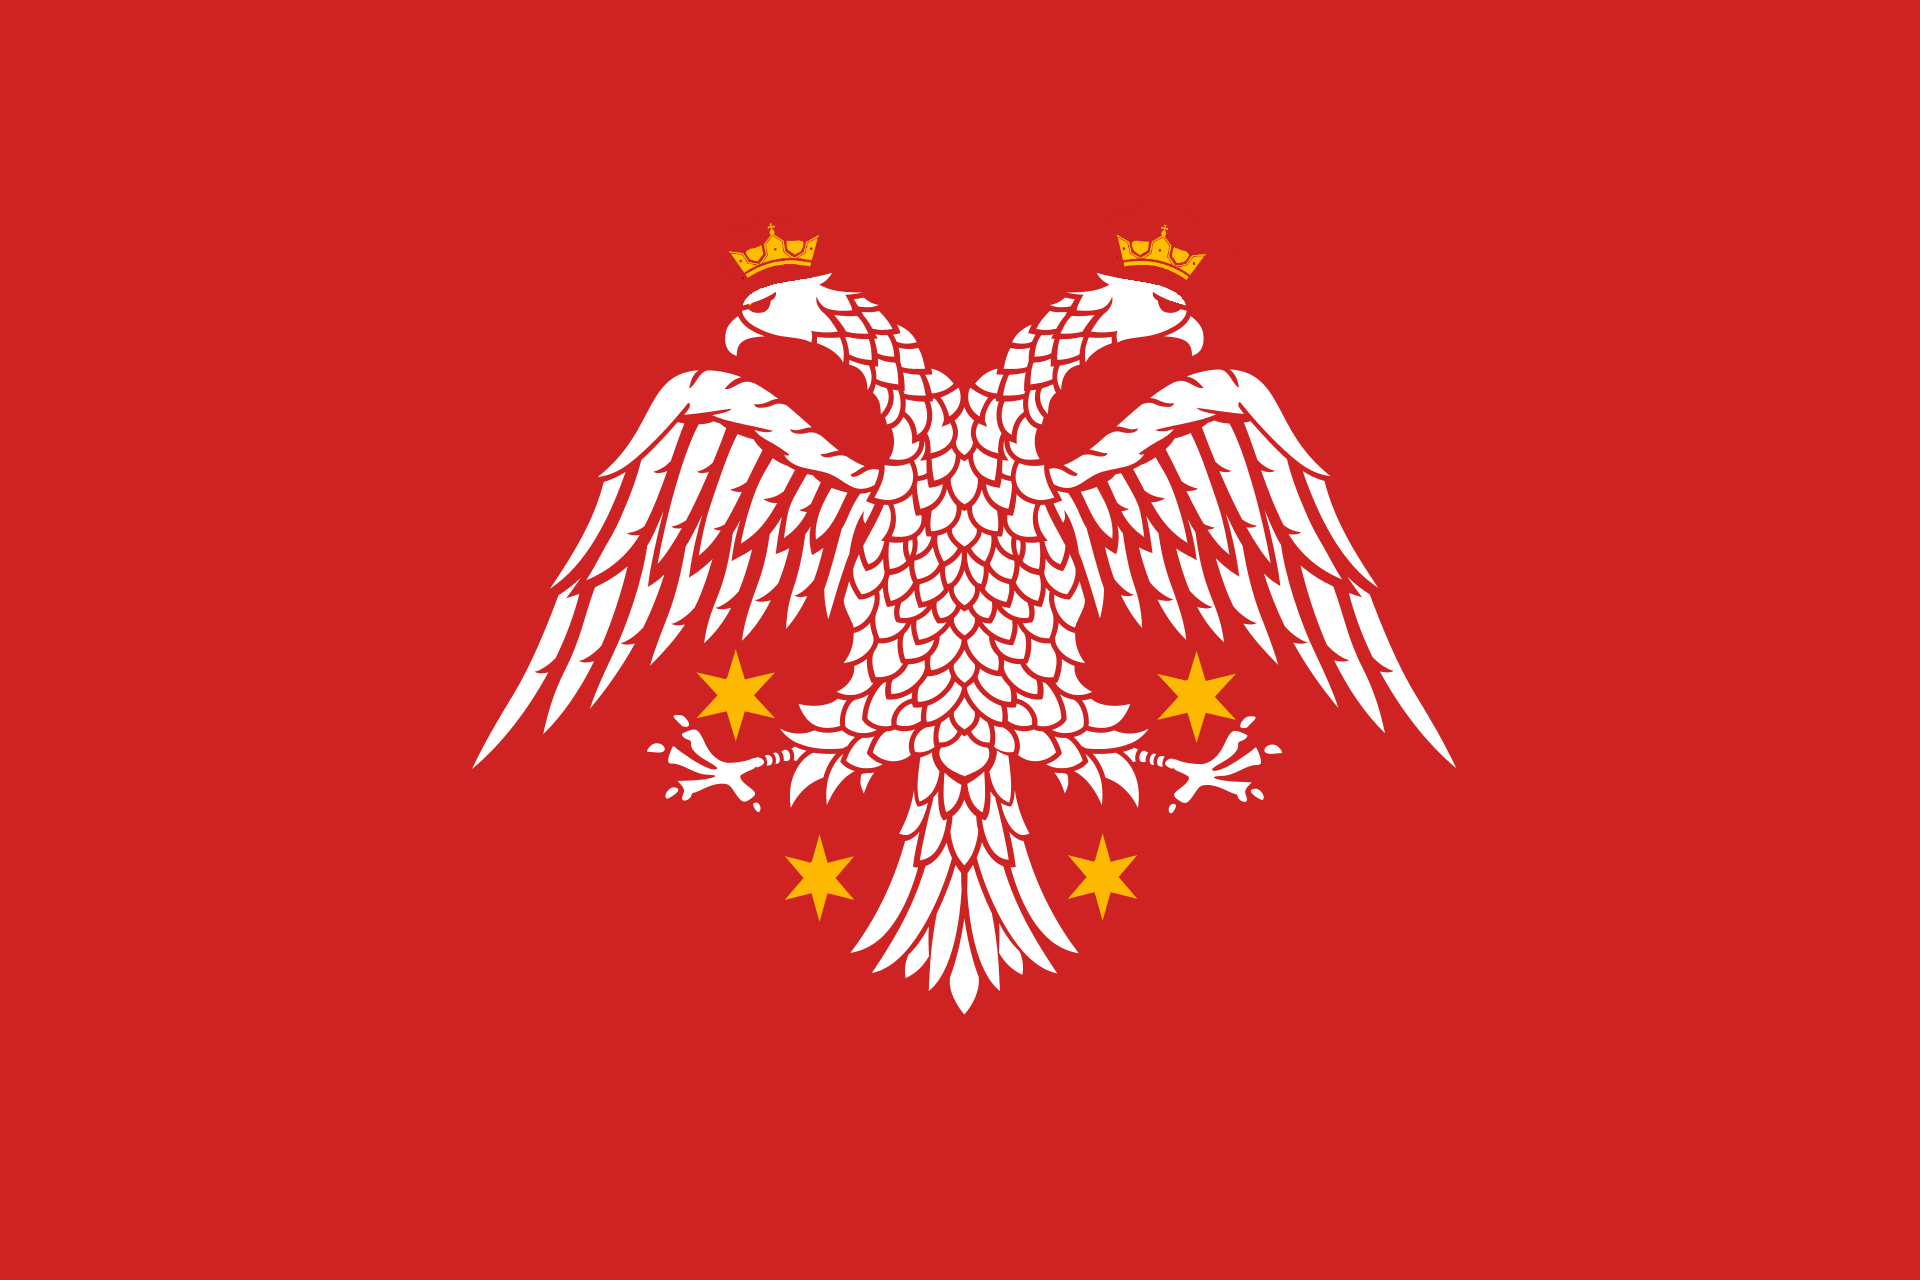 Flag of Zeta under the Crnojevići